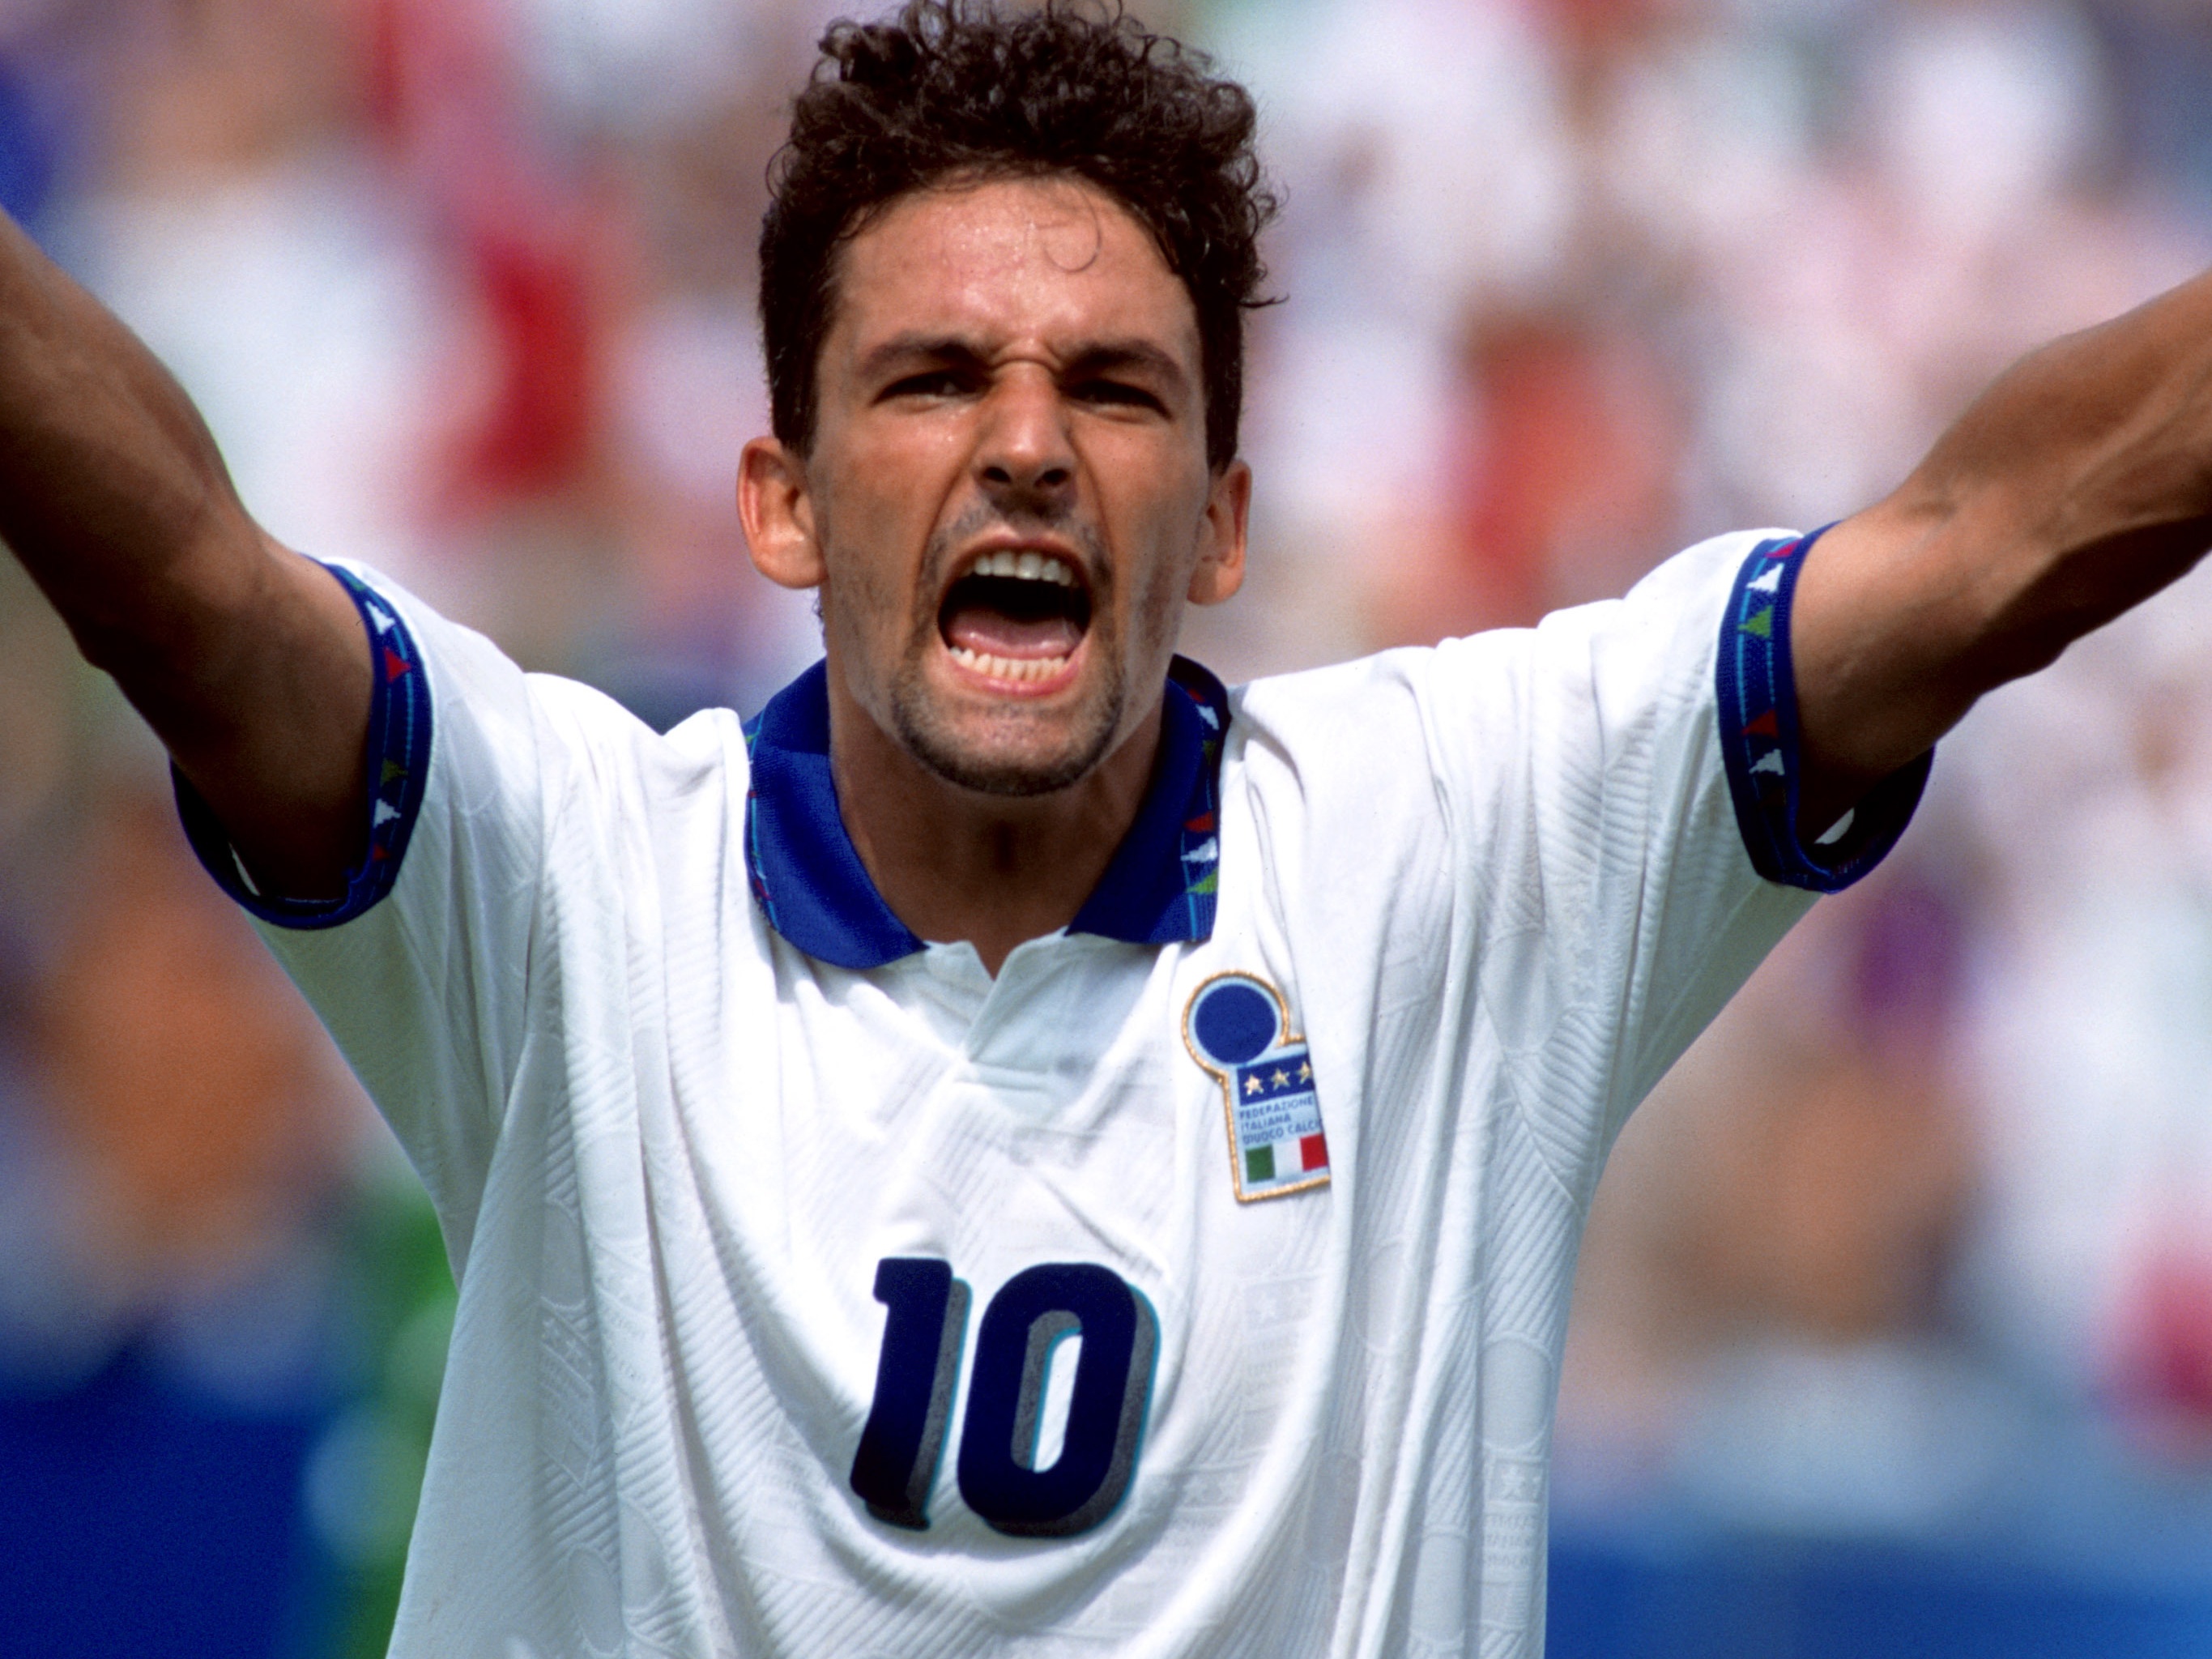 Roberto Baggio at the 1994 World Cup